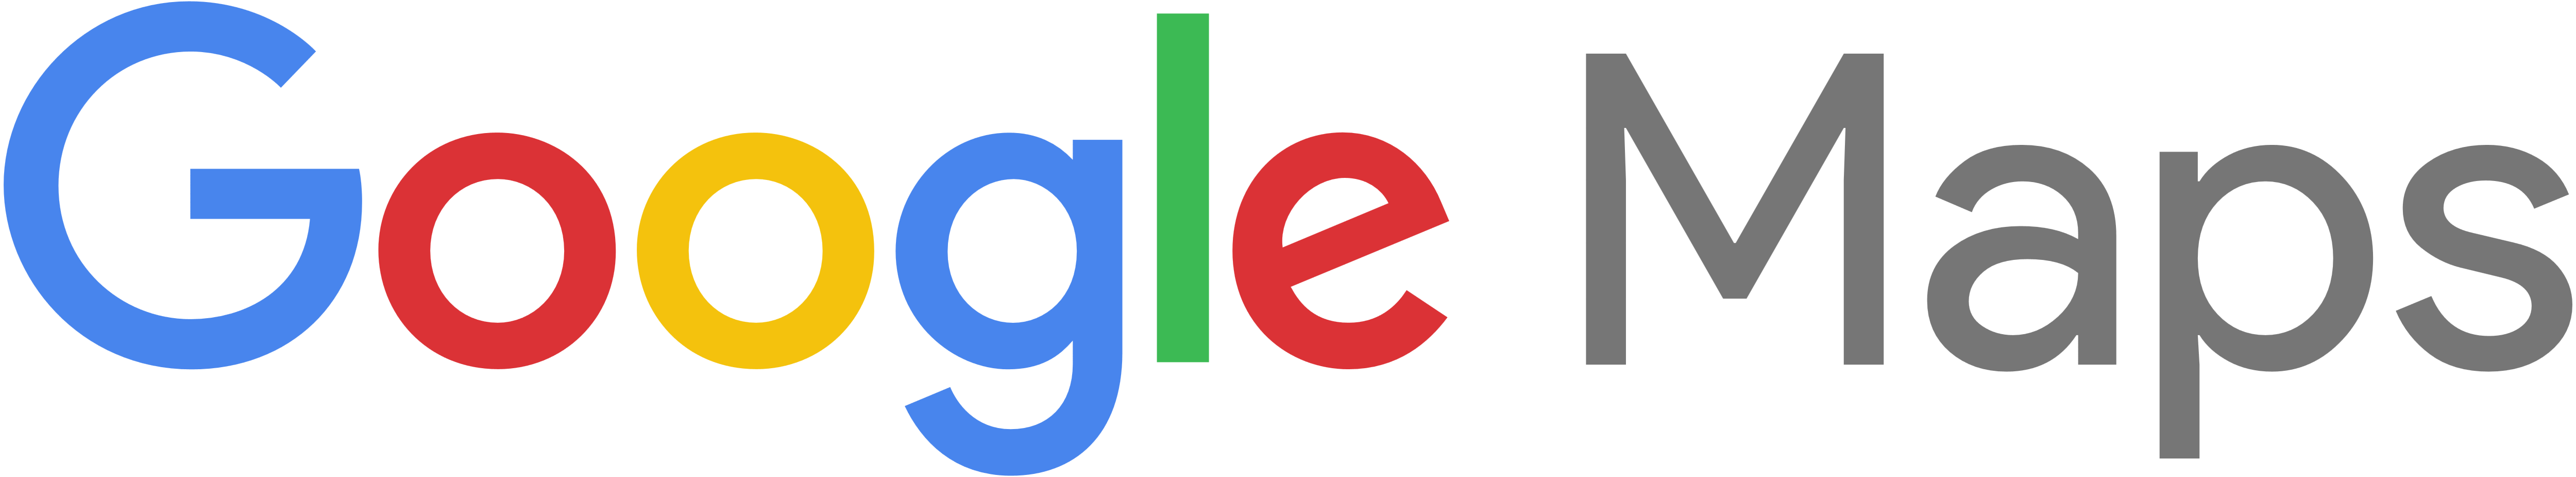 Official Google Maps Logo - LogoDix